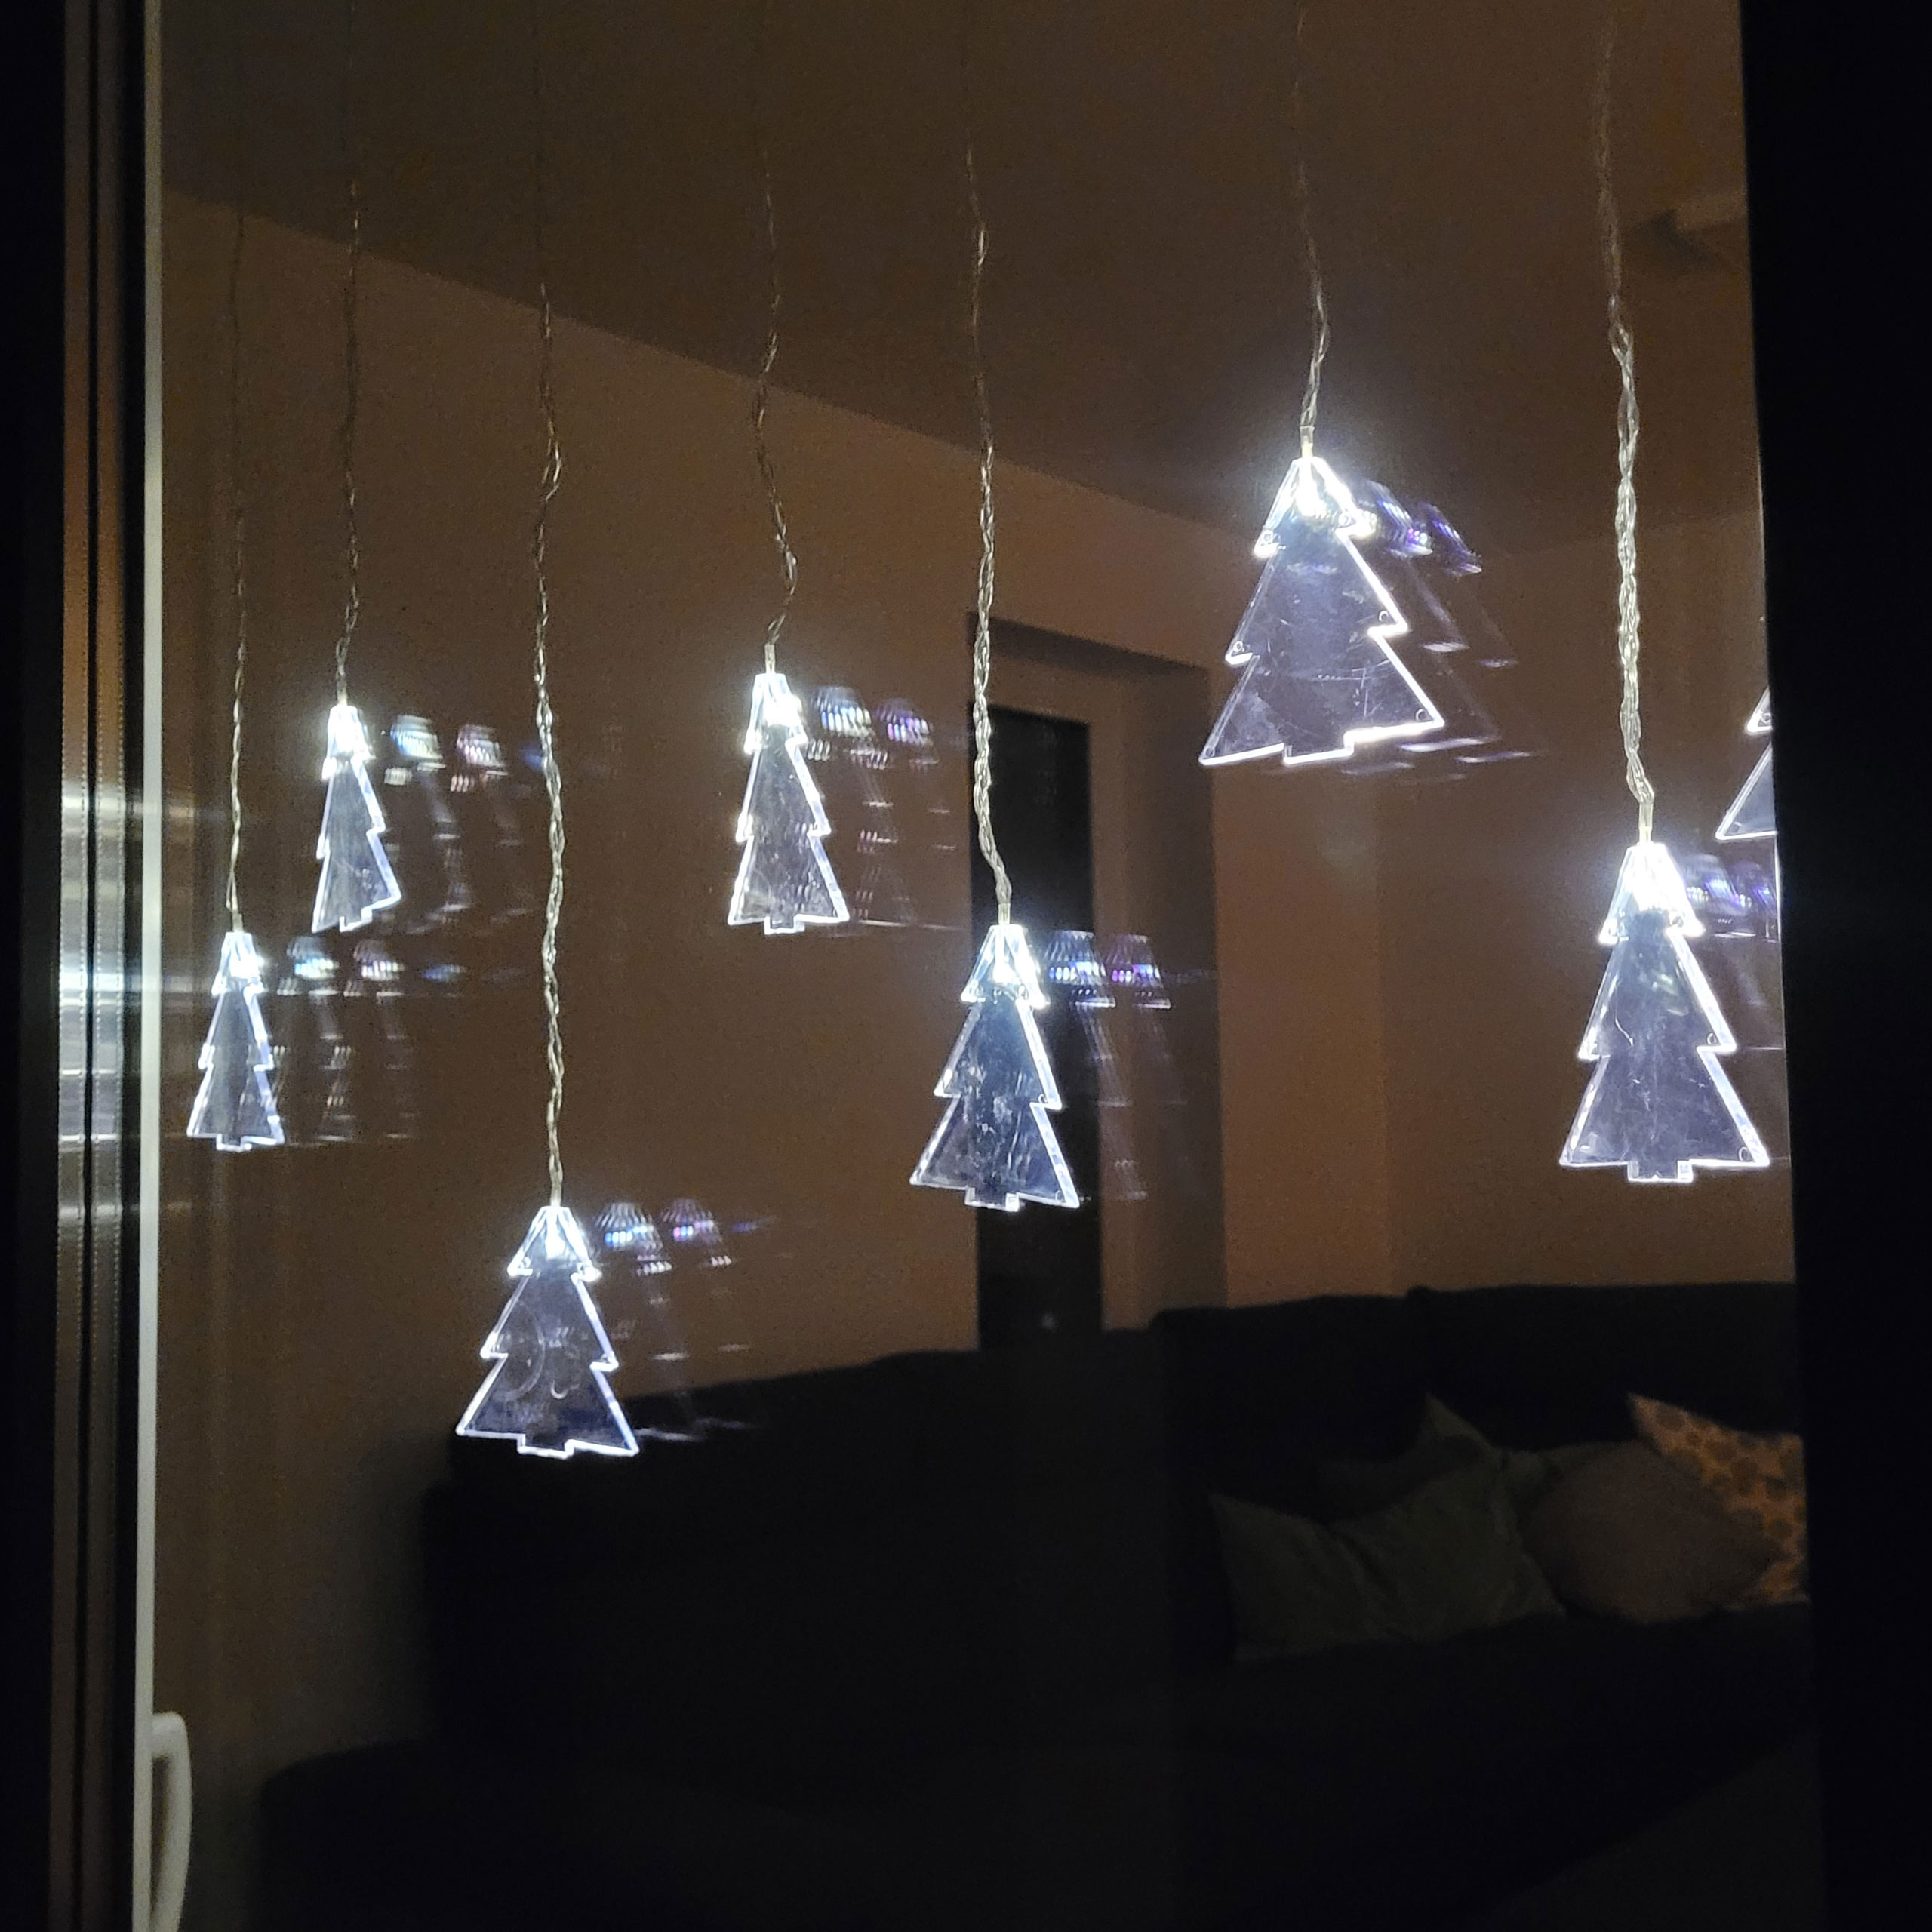 Raburg LED-Lichterkette Acrylvorhang Tannenbaum, 8 LEDs in Warm-Weiß, 110 cm lang